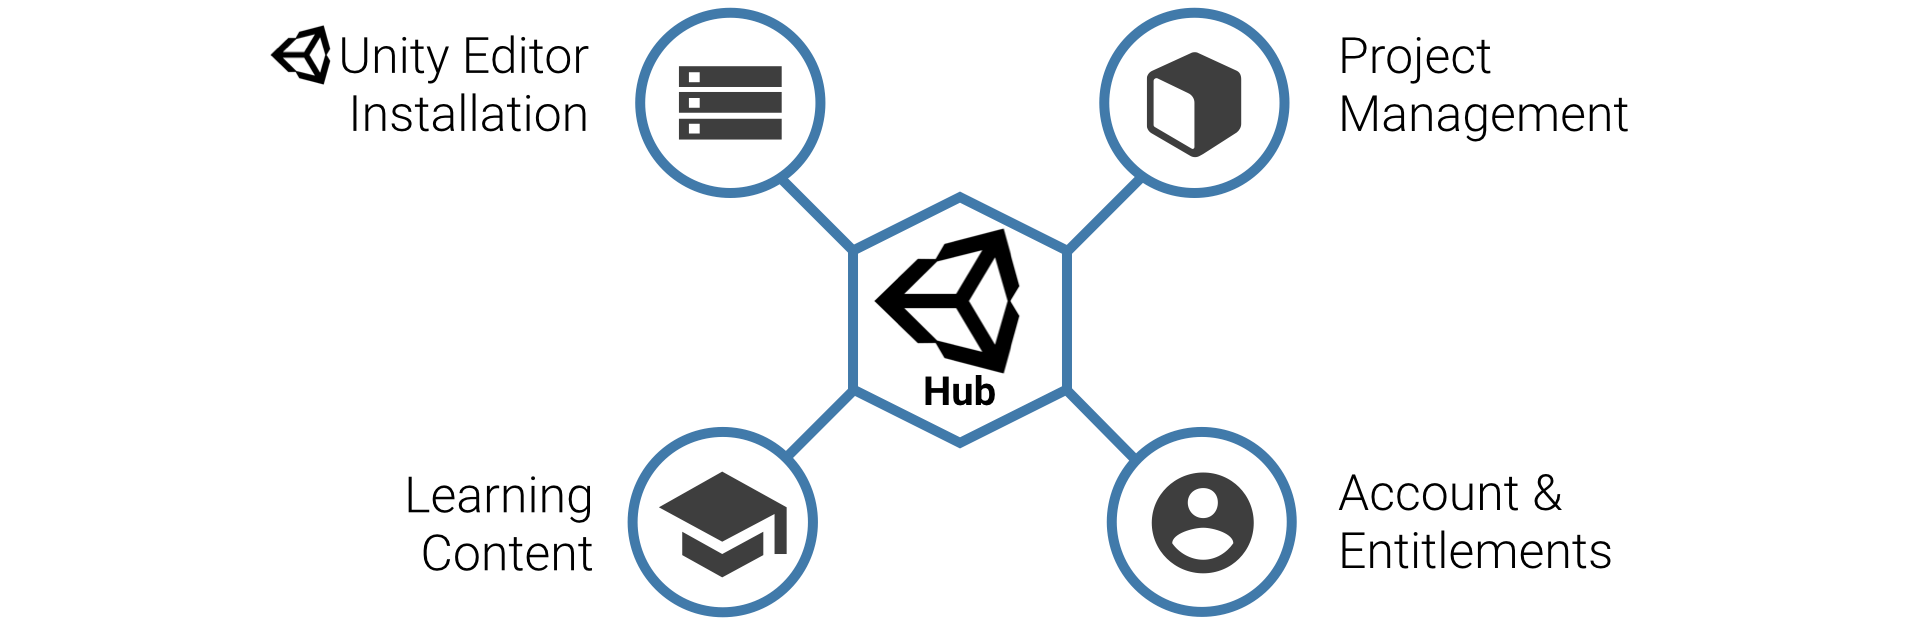 unity hub free download